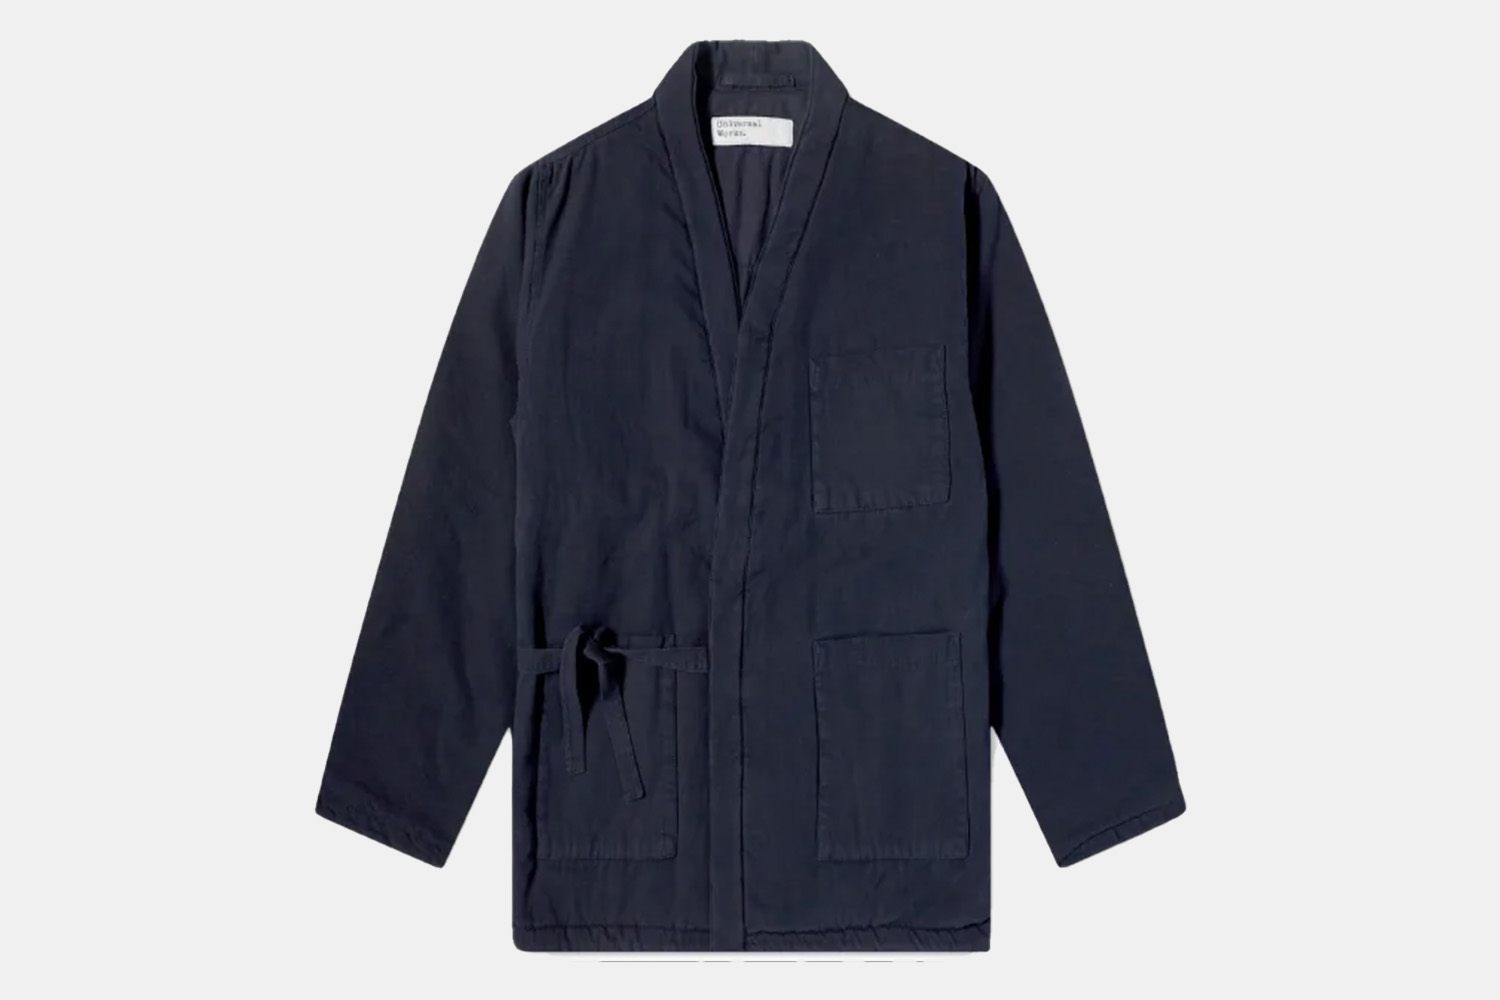 a workwear jacket with a classic kimono tie In navy.